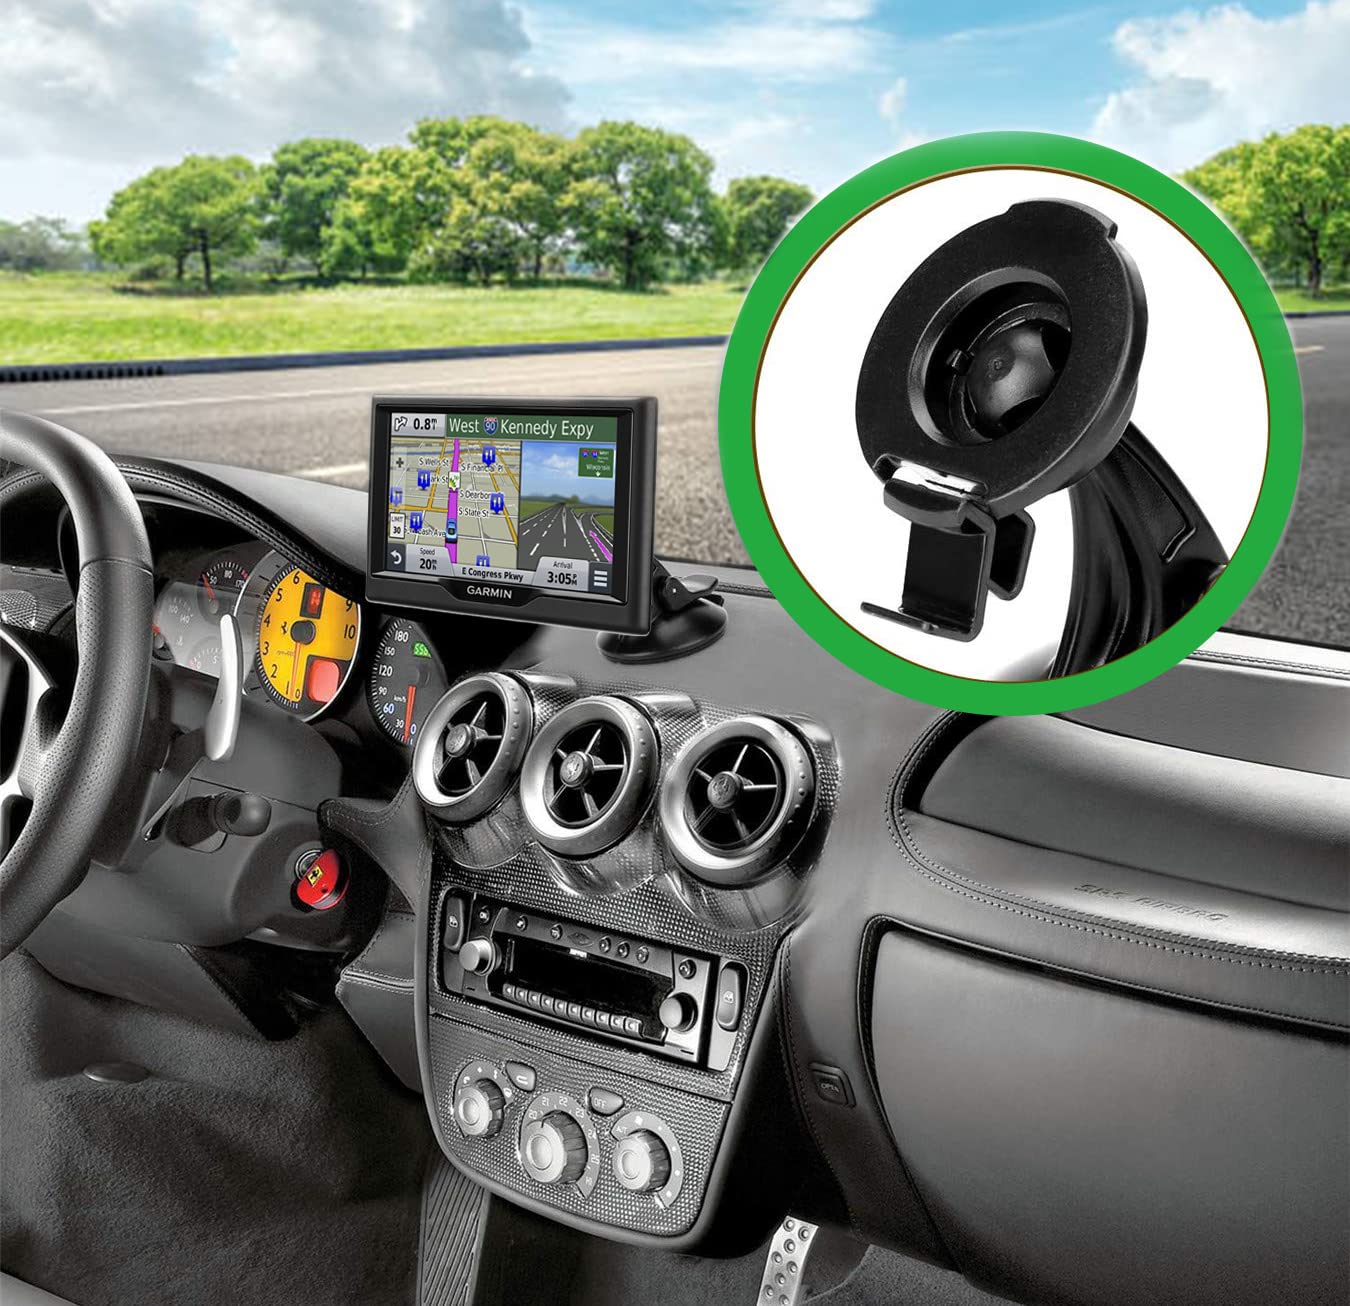 Ramtech Universal GPS Cradle Bracket Clip Mount Compatible with Garmin Drive 60LM 60LMT 61 LM 61 LMT-S, 6 LM EX, DriveSmart 60LMT 61 61LMT-S, 65 & Traffic, 65 with Amazon Alexa, 66, CBR